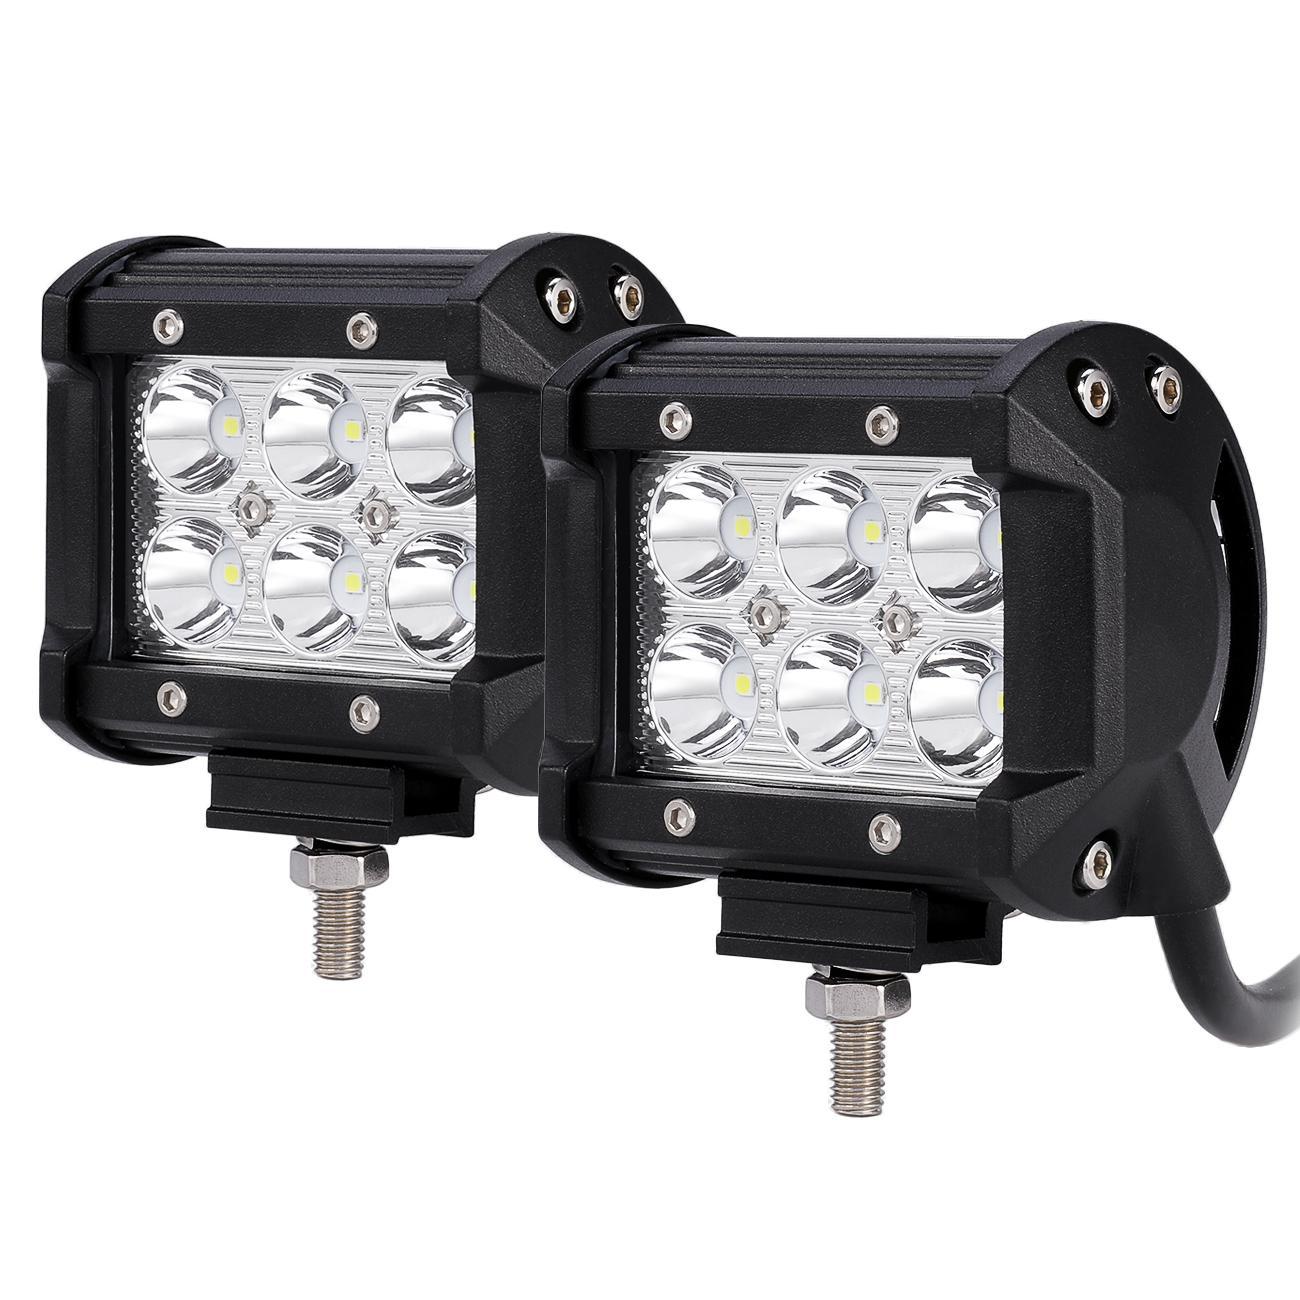 For Jeep Wrangler JK 52 700W LED Work Light Bar +4x 18W Pods +Mount  Bracket Kit